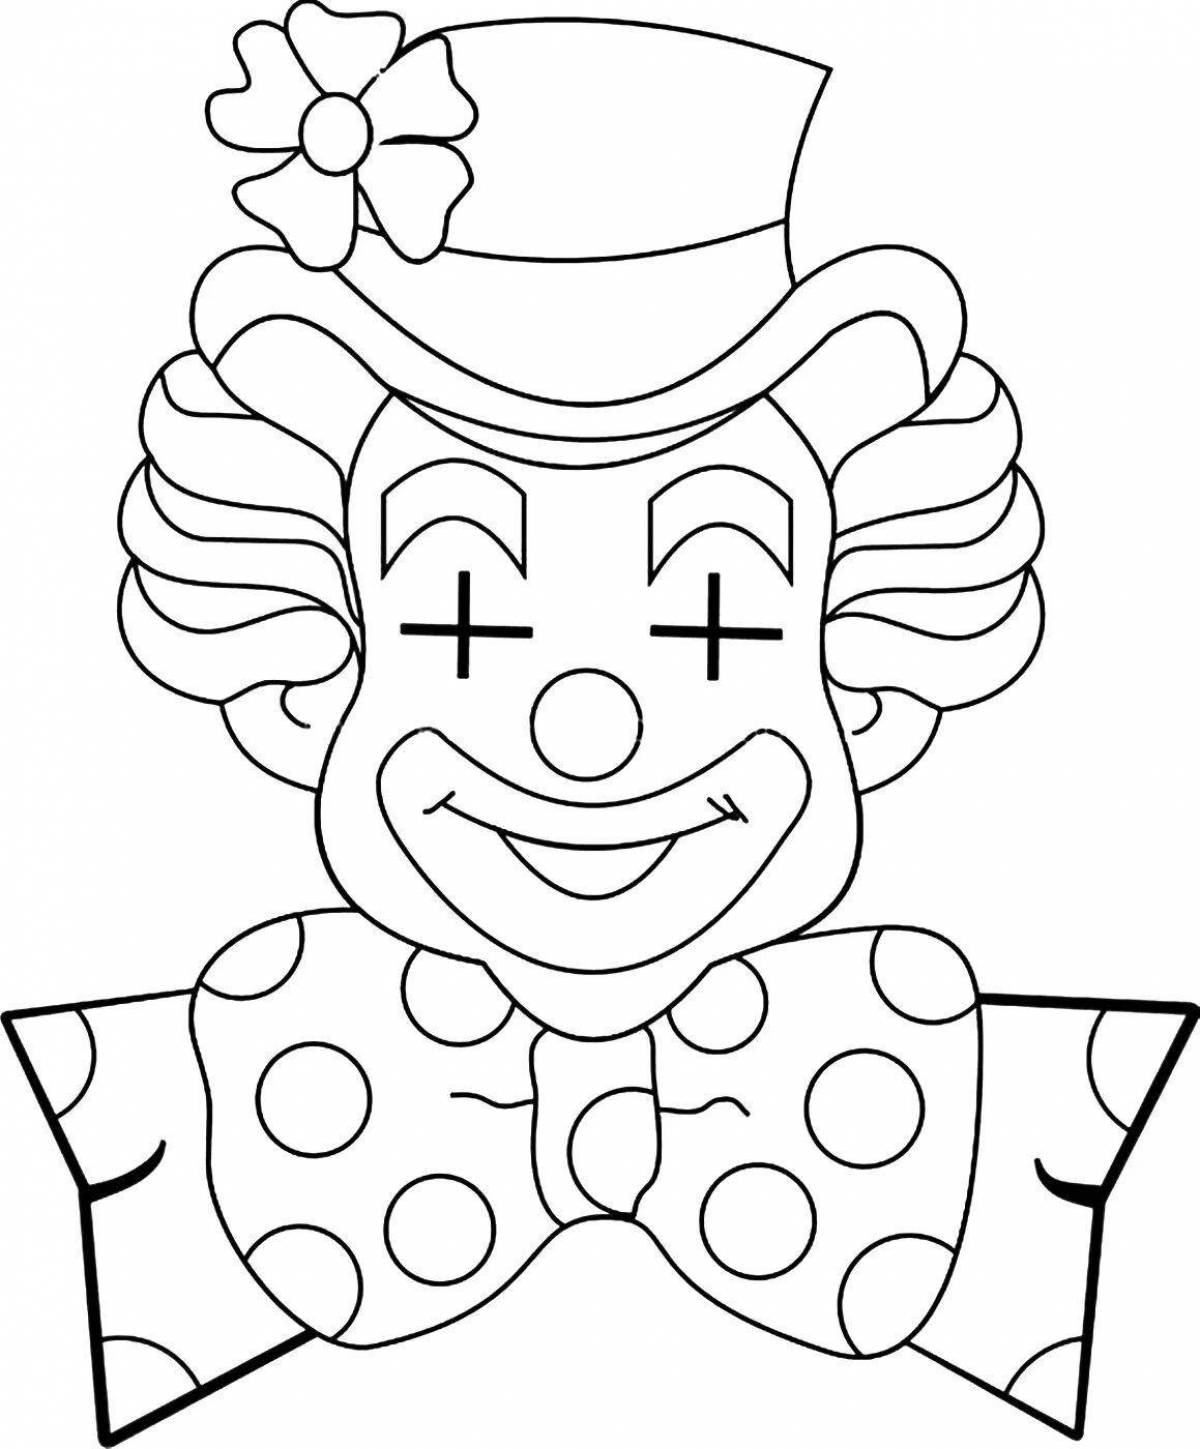 Шаблон клоуна для аппликации для детей. Клоун раскраска. Клоун шаблон. Аппликация "клоун". Маска клоун раскраска для детей.